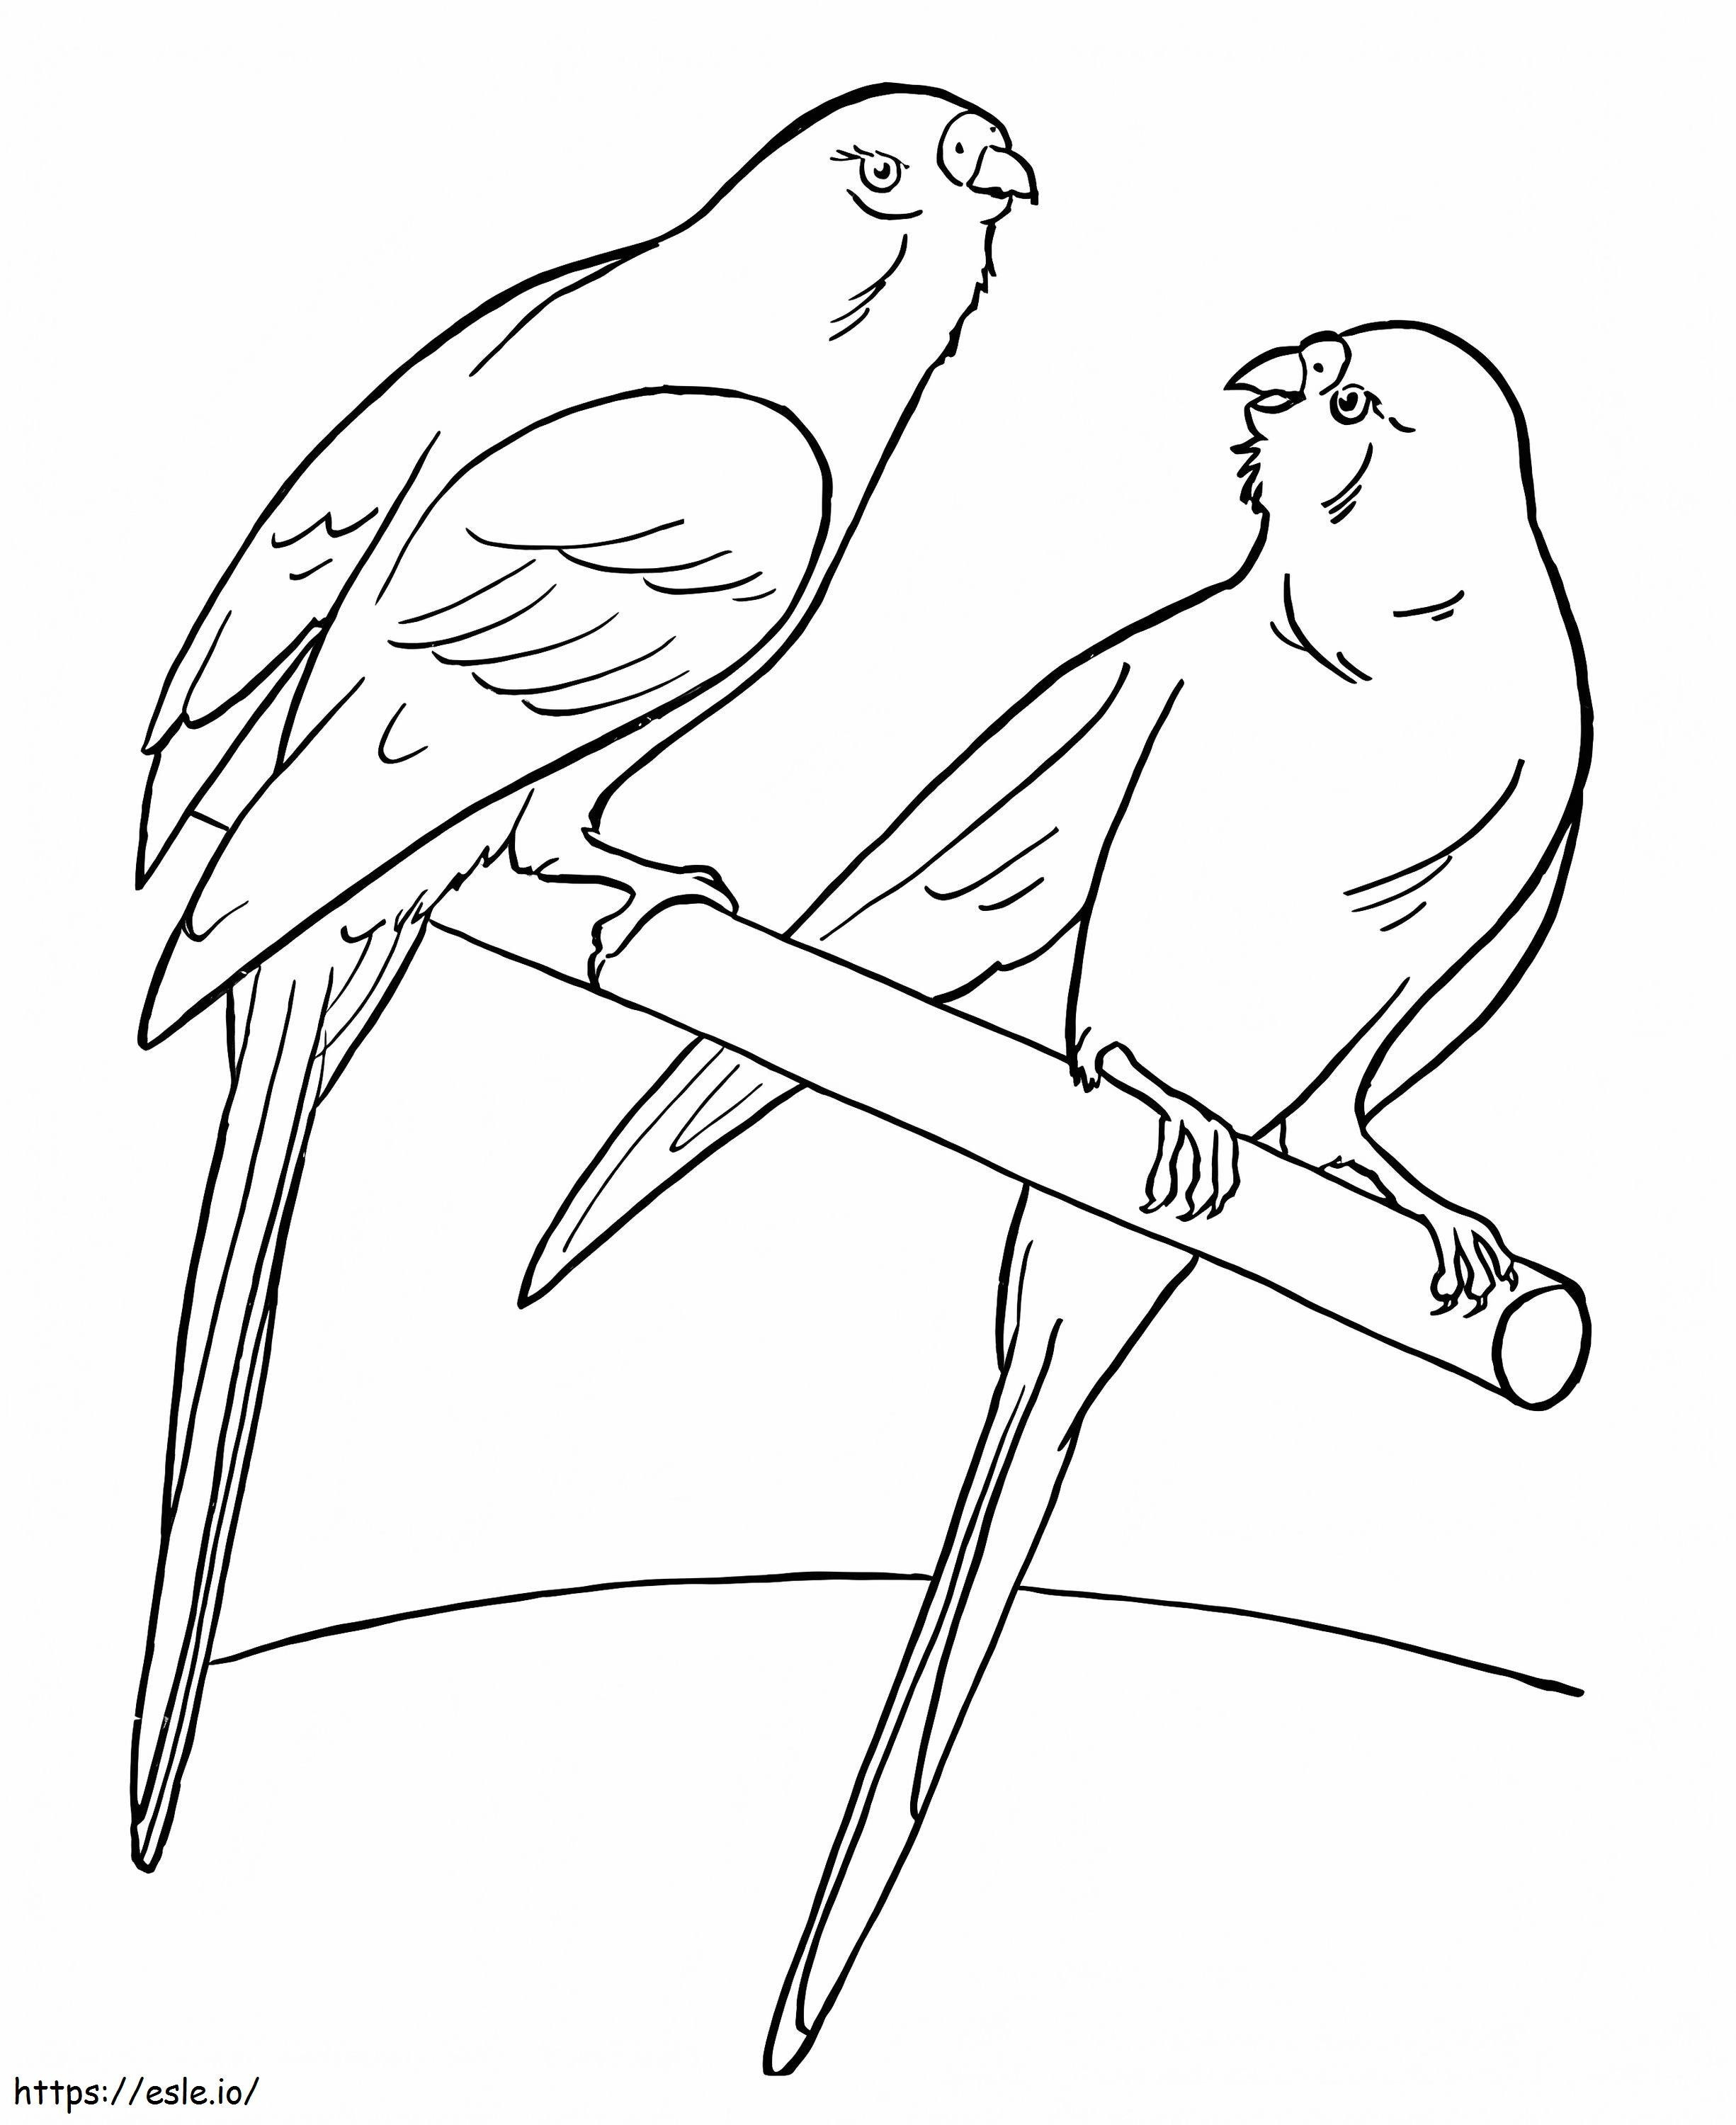 Pet Birds coloring page